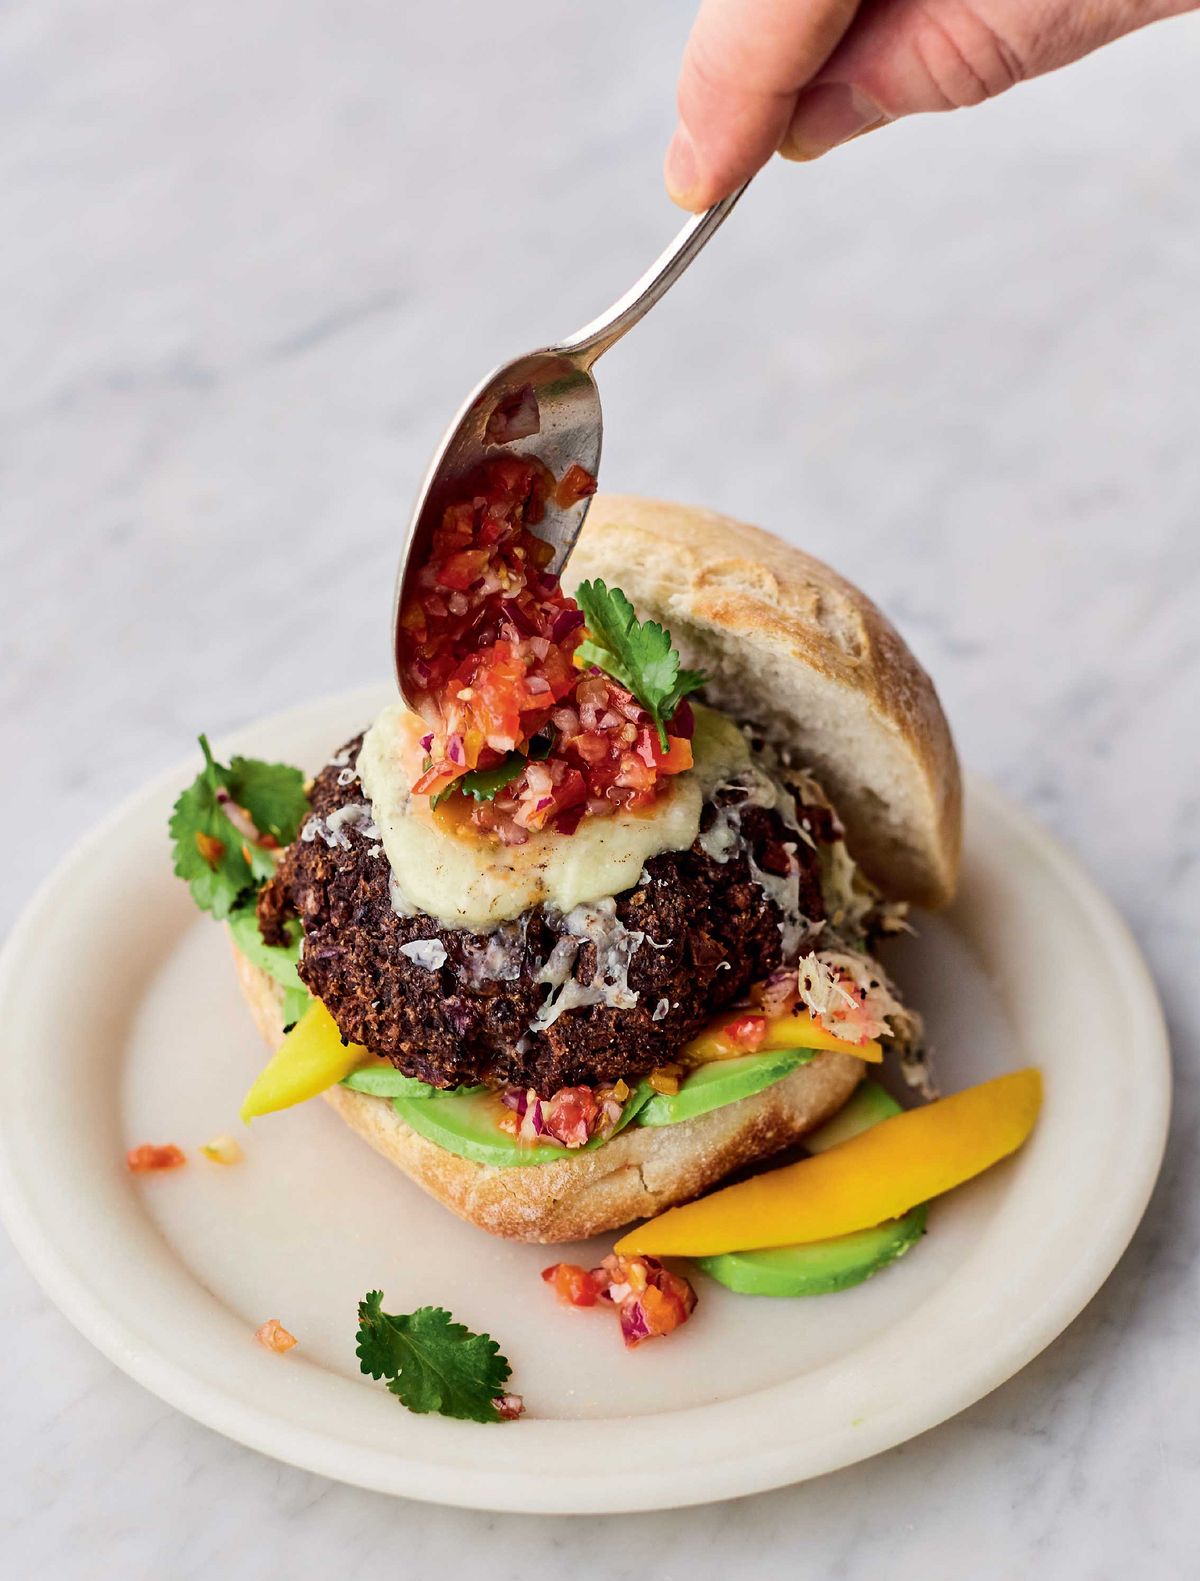 Jamie Oliver’s Roasted Black Bean Burgers with Zingy Salsa, Yoghurt, Sliced Mango and Avocado